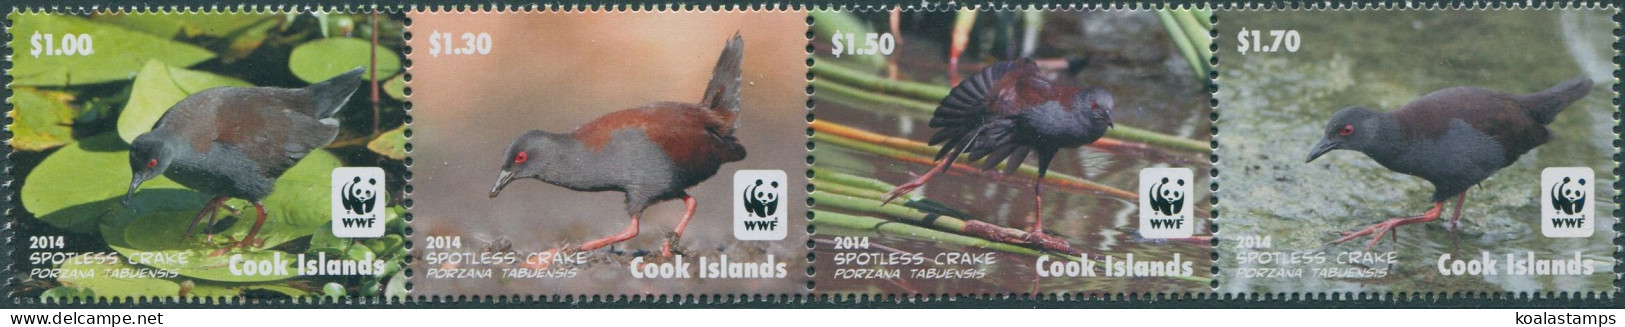 Cook Islands 2014 SG1808a-1811a WWF Spotless Crake Strip MNH - Cook Islands